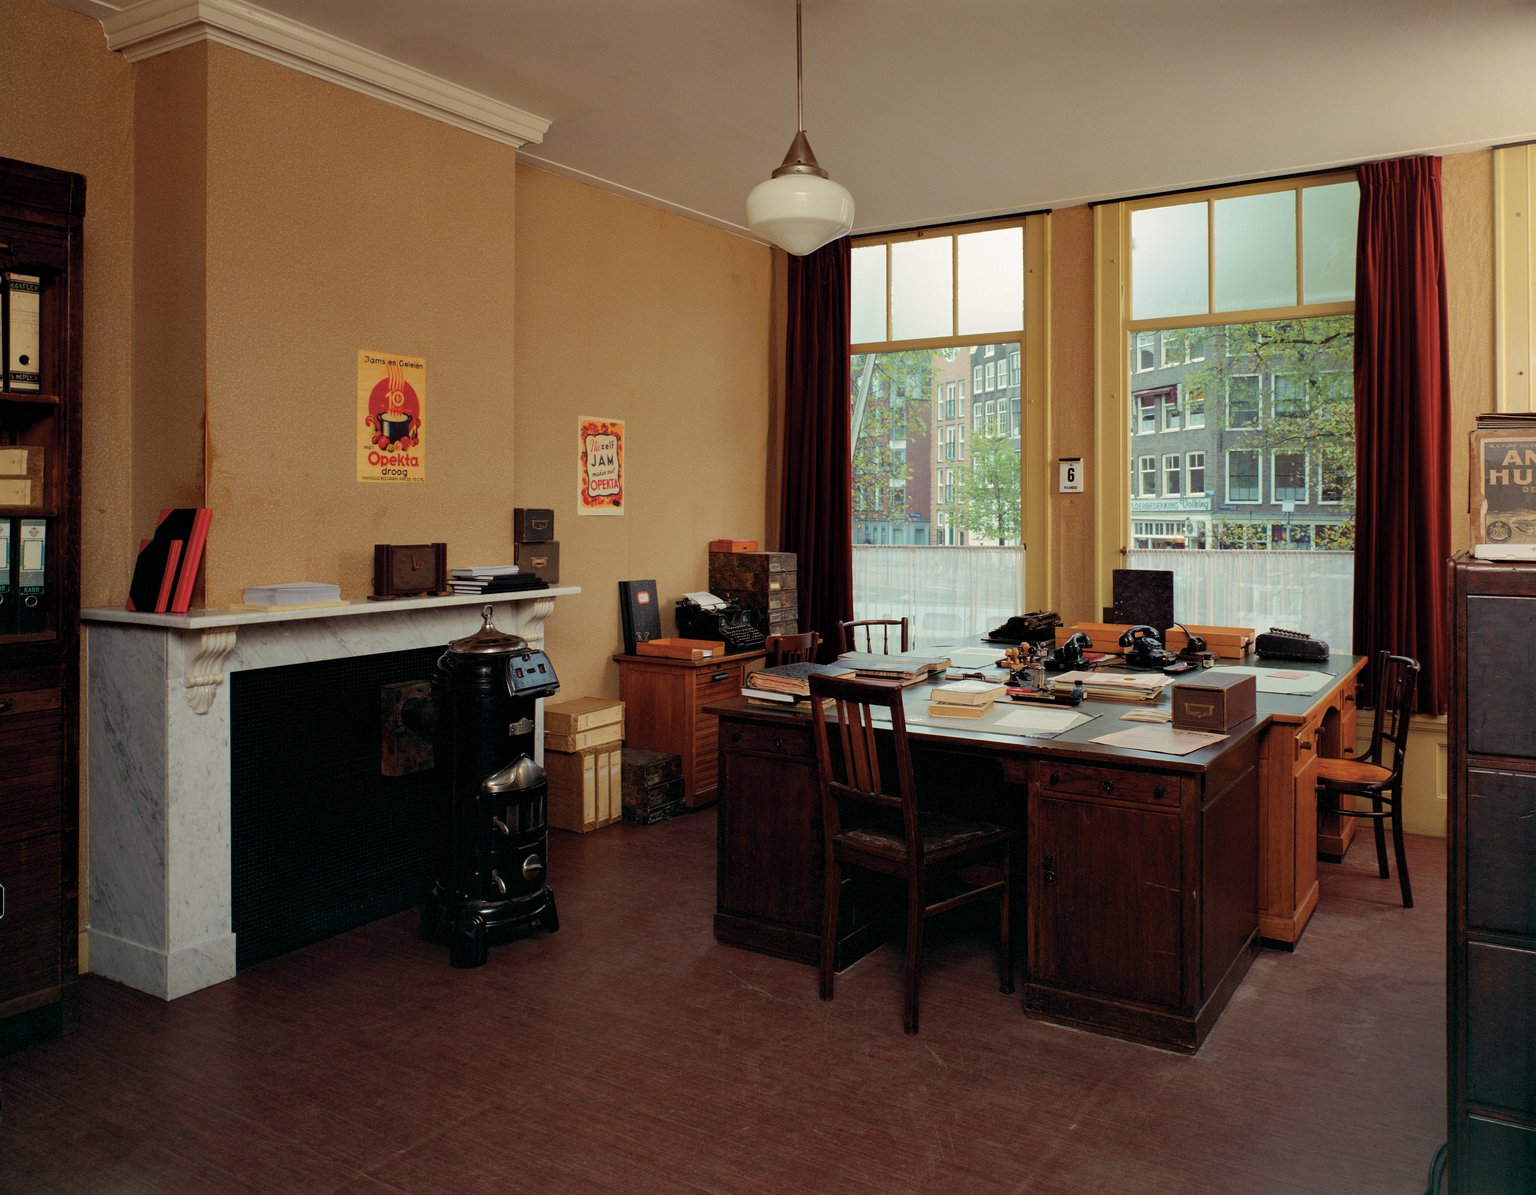 The office of Johannes Kleiman, Miep Gies and Bep Voskuijl, reconstruction (1999).